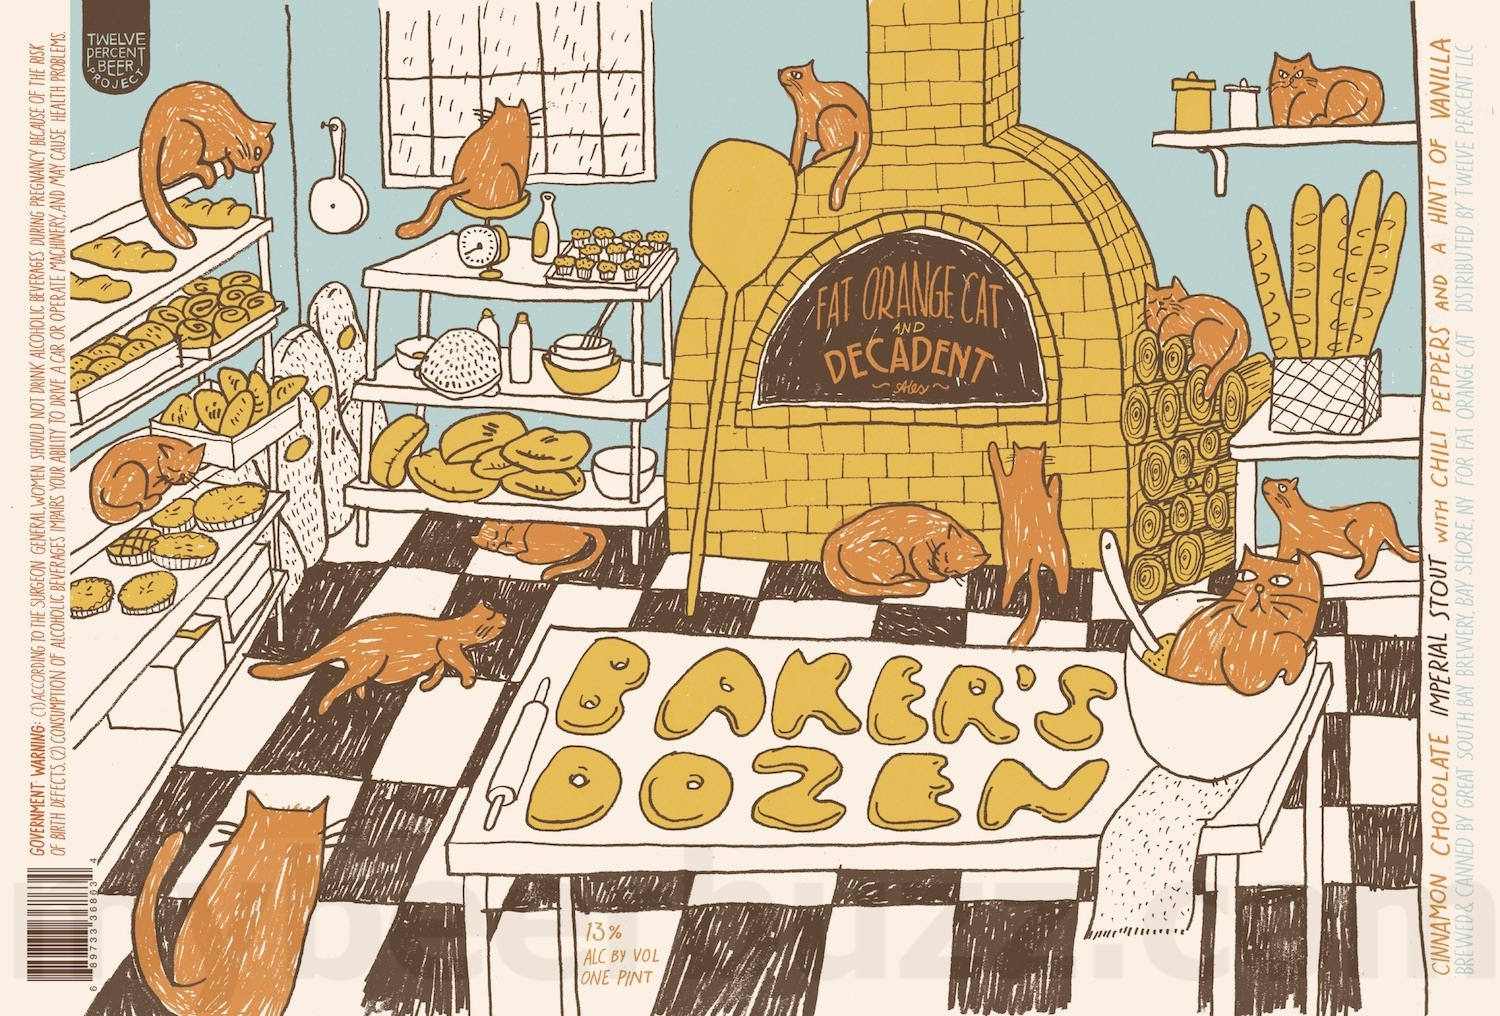 Image result for fat orange cat decadent bakers dozen